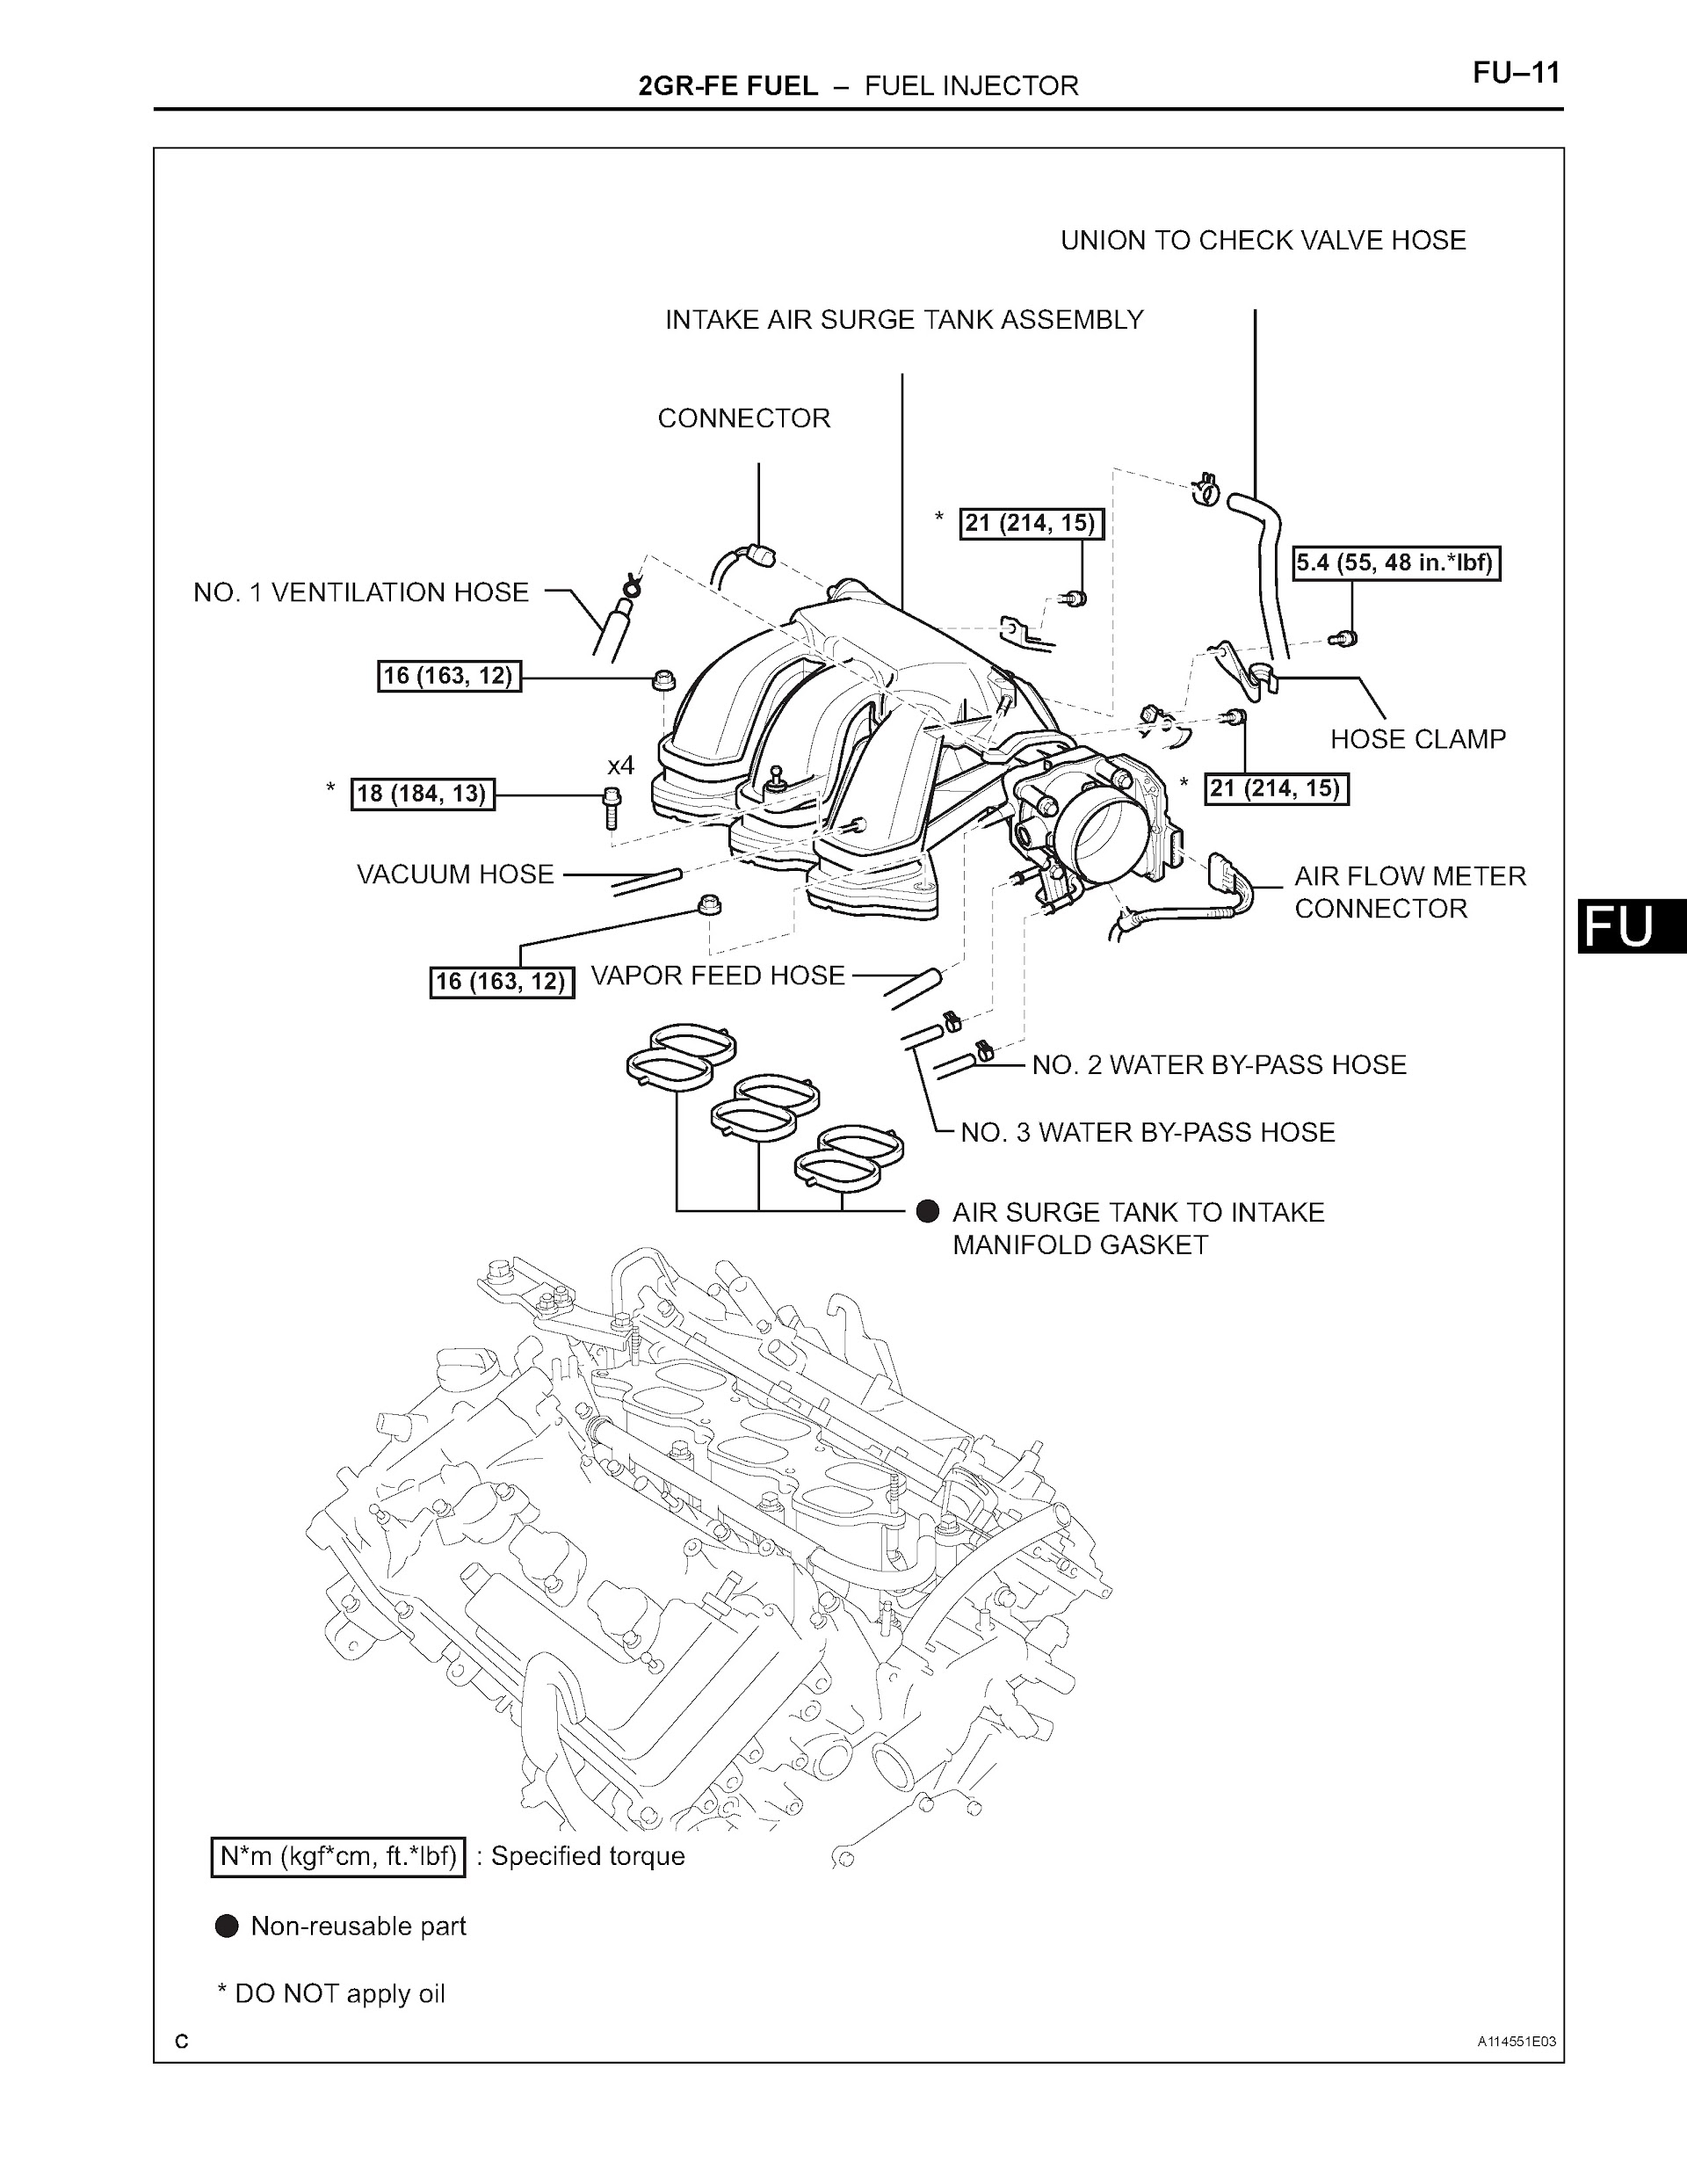 2007-2010 Toyota Camry Repair Manual, 2GR-FE Engine